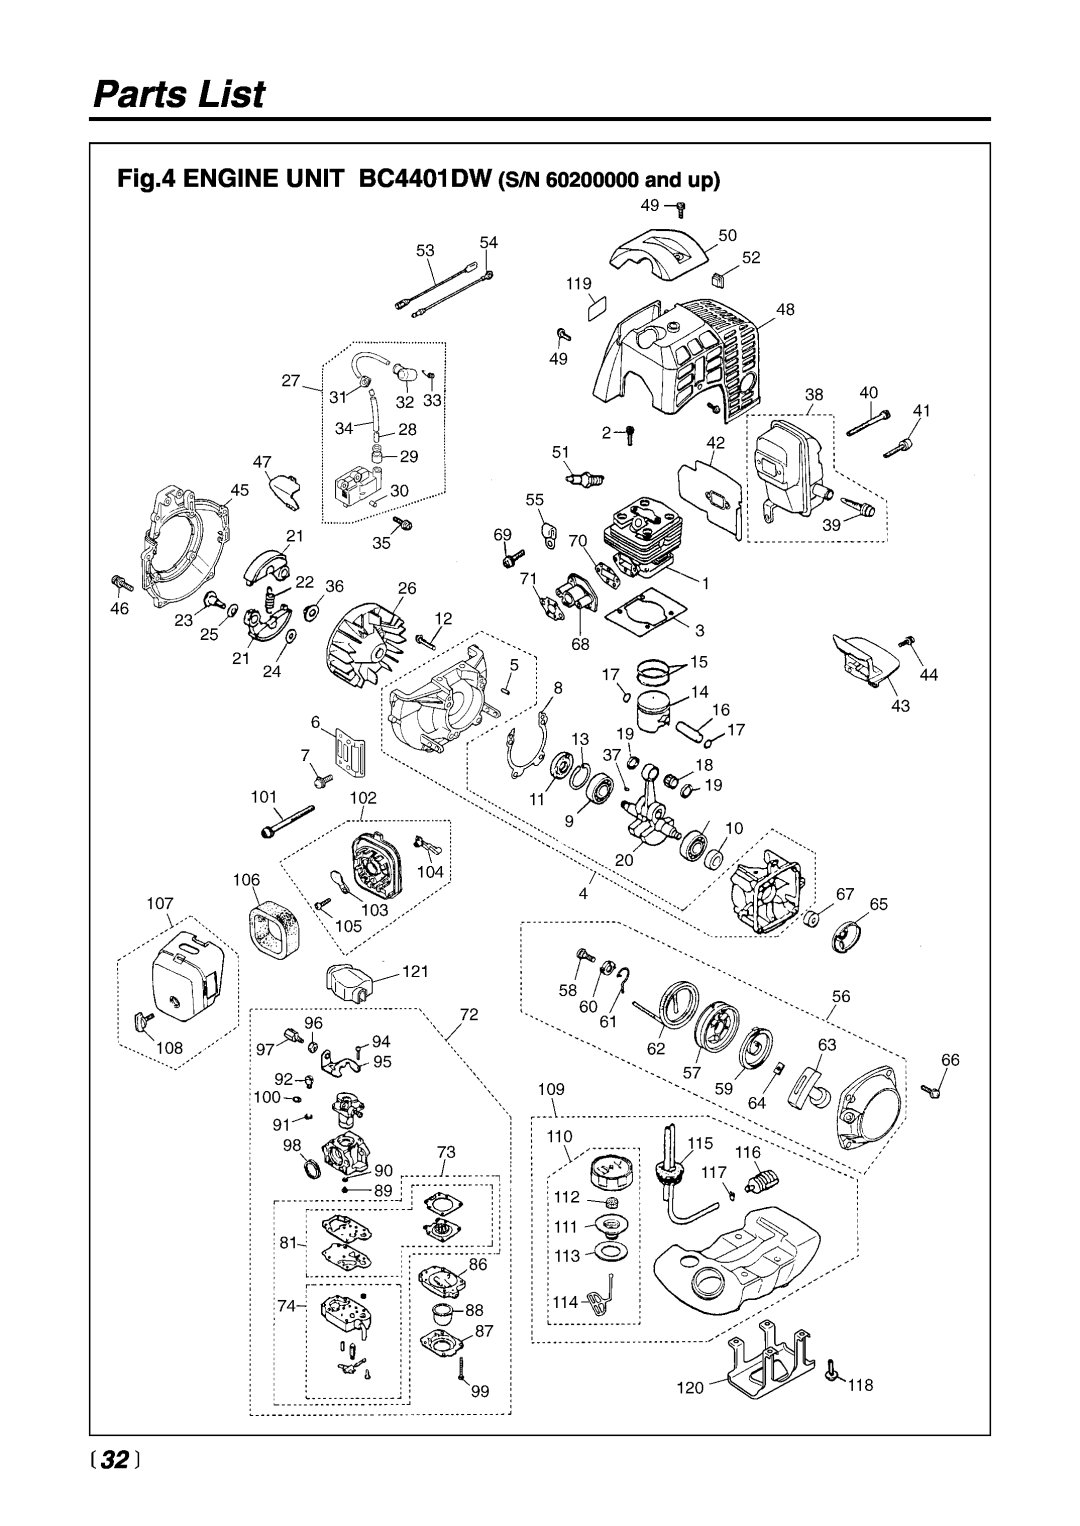 Zenoah manual ENGINE UNIT BC4401DW S/N 60200000 and up, Parts List,  32  